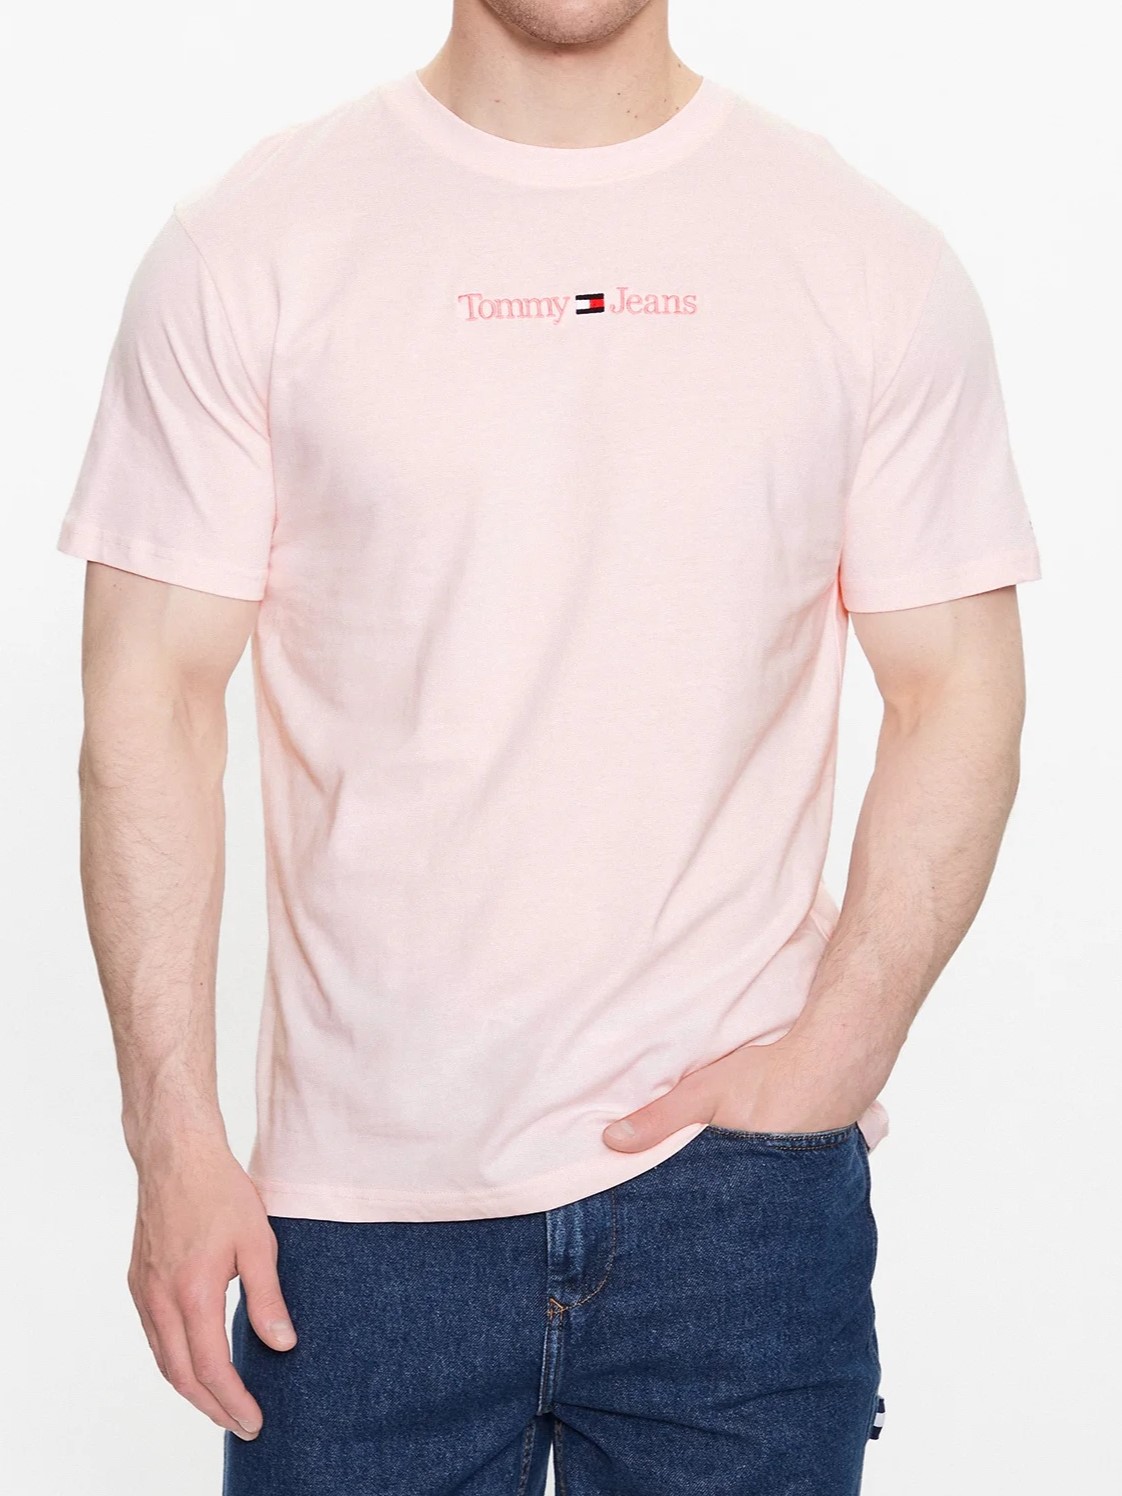 Bianco DM0DM16825 - Clothing T-shirt Faint e Pink Tommy Text | Small Store Arta TJM TJ9 Nero CLSC Jeans